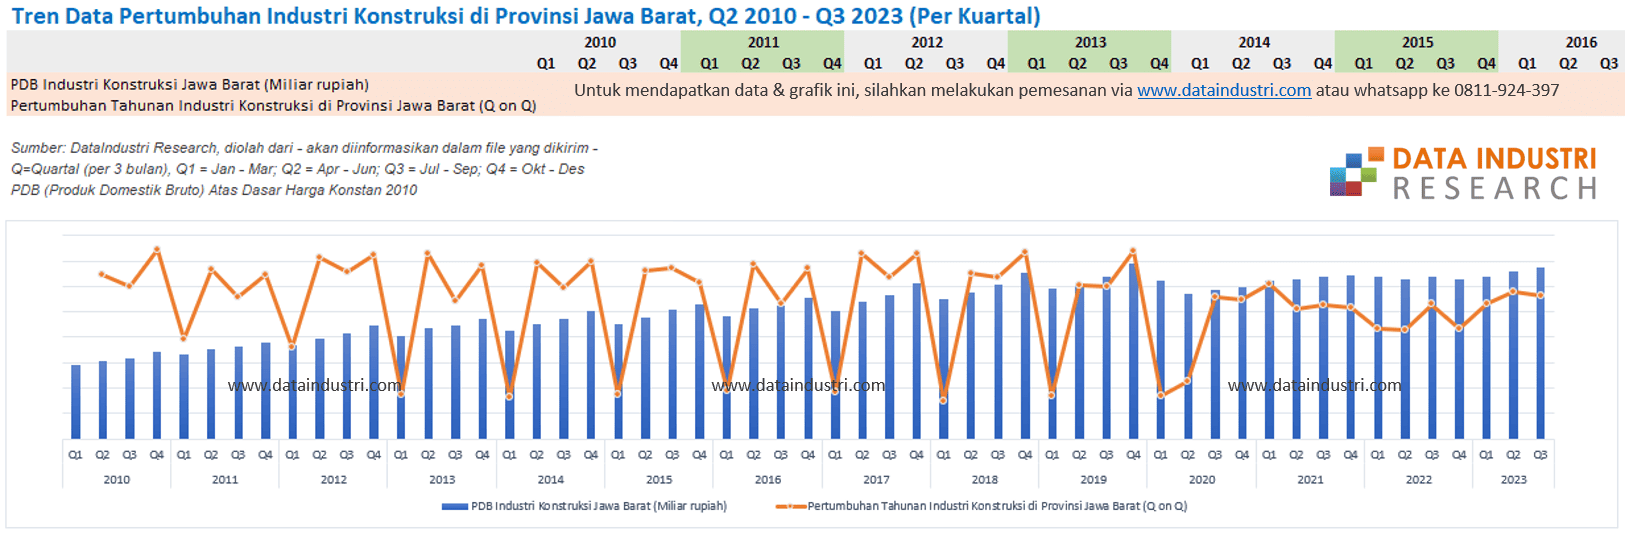 Tren Data Pertumbuhan Industri Konstruksi di Provinsi Jawa Barat, Q2 2010 - Q3 2023 (Per Kuartal)